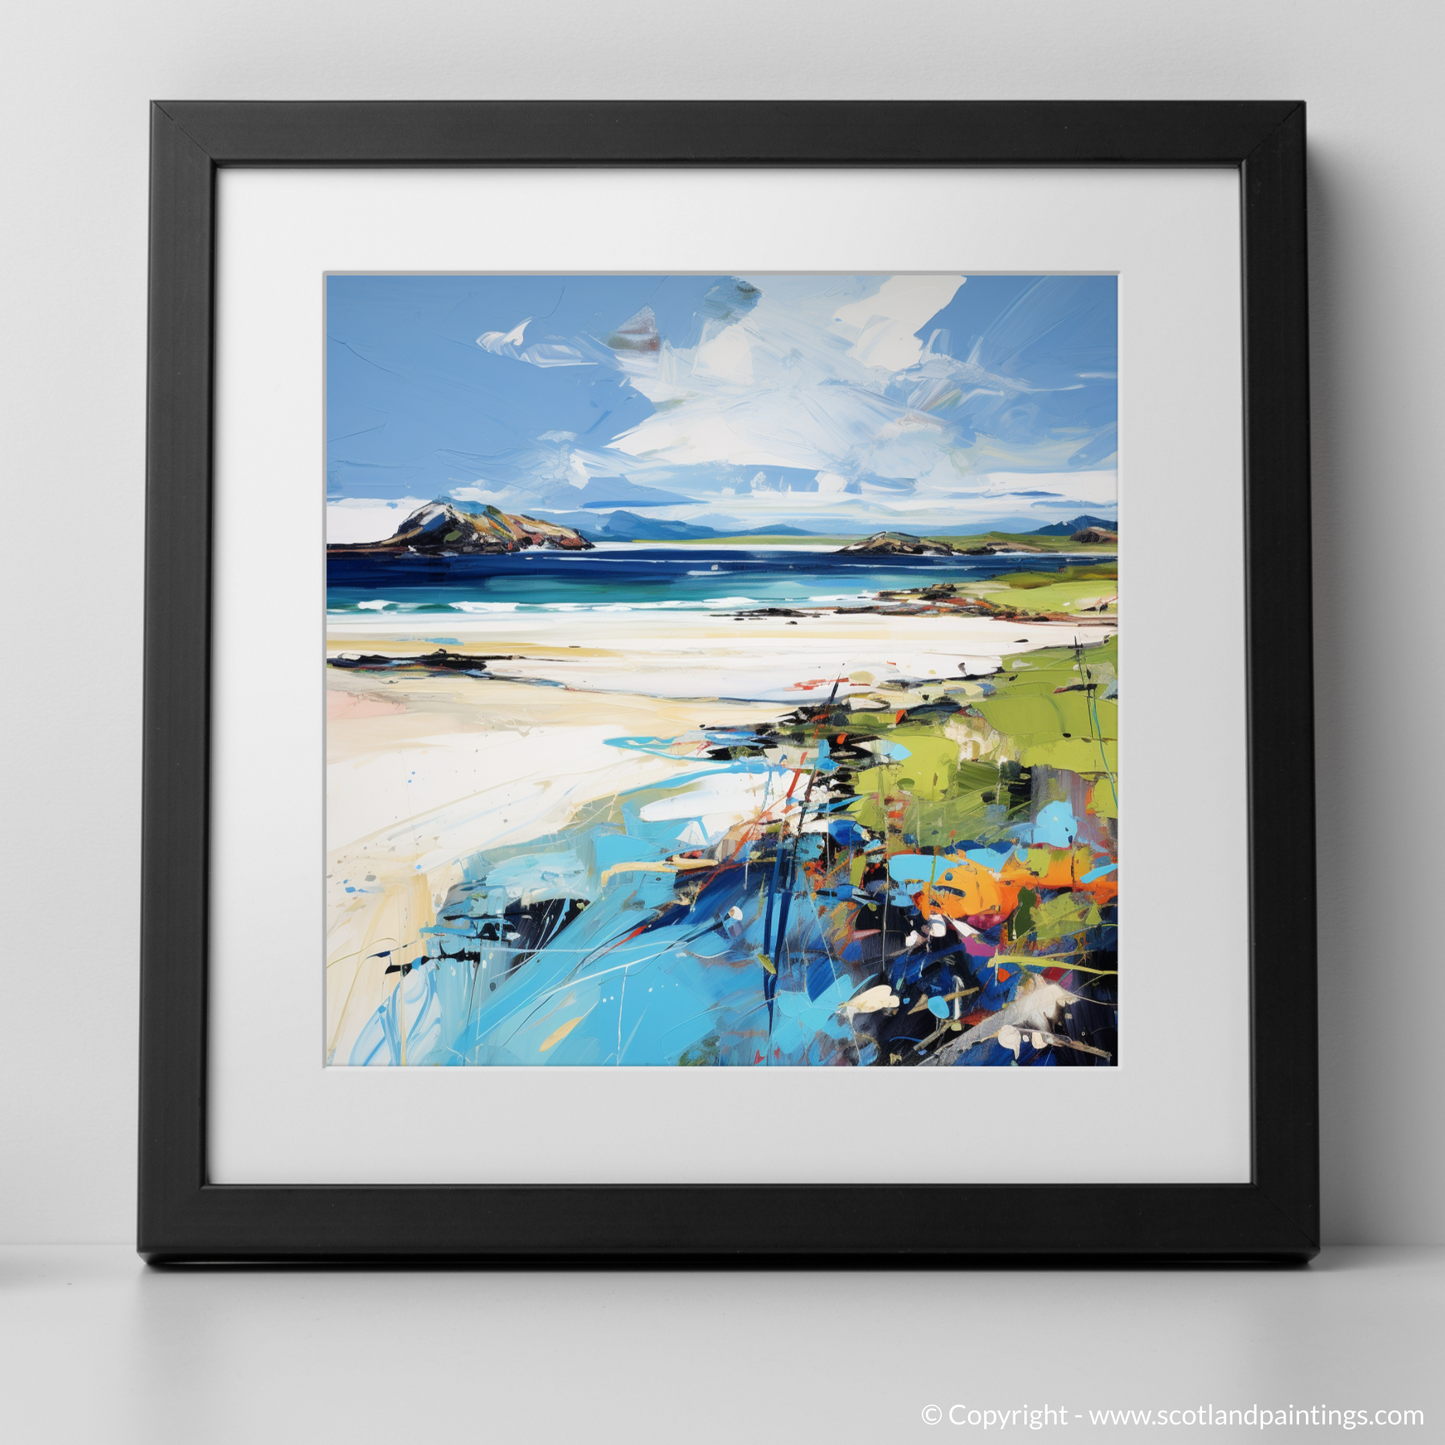 Art Print of Camusdarach Beach with a black frame